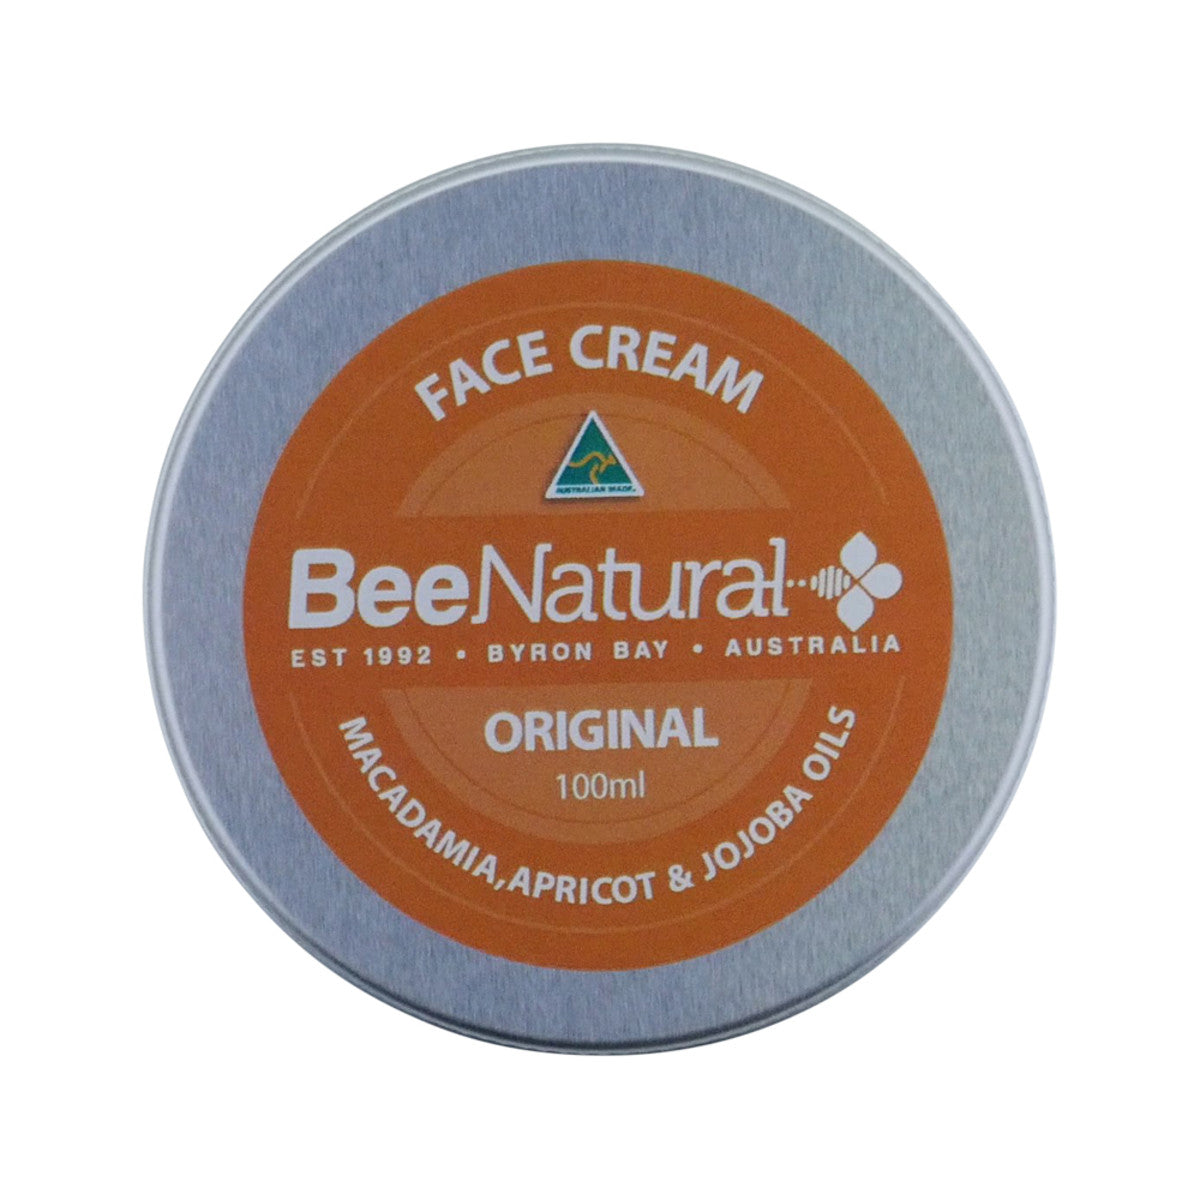 Bee Natural - Face Cream Original